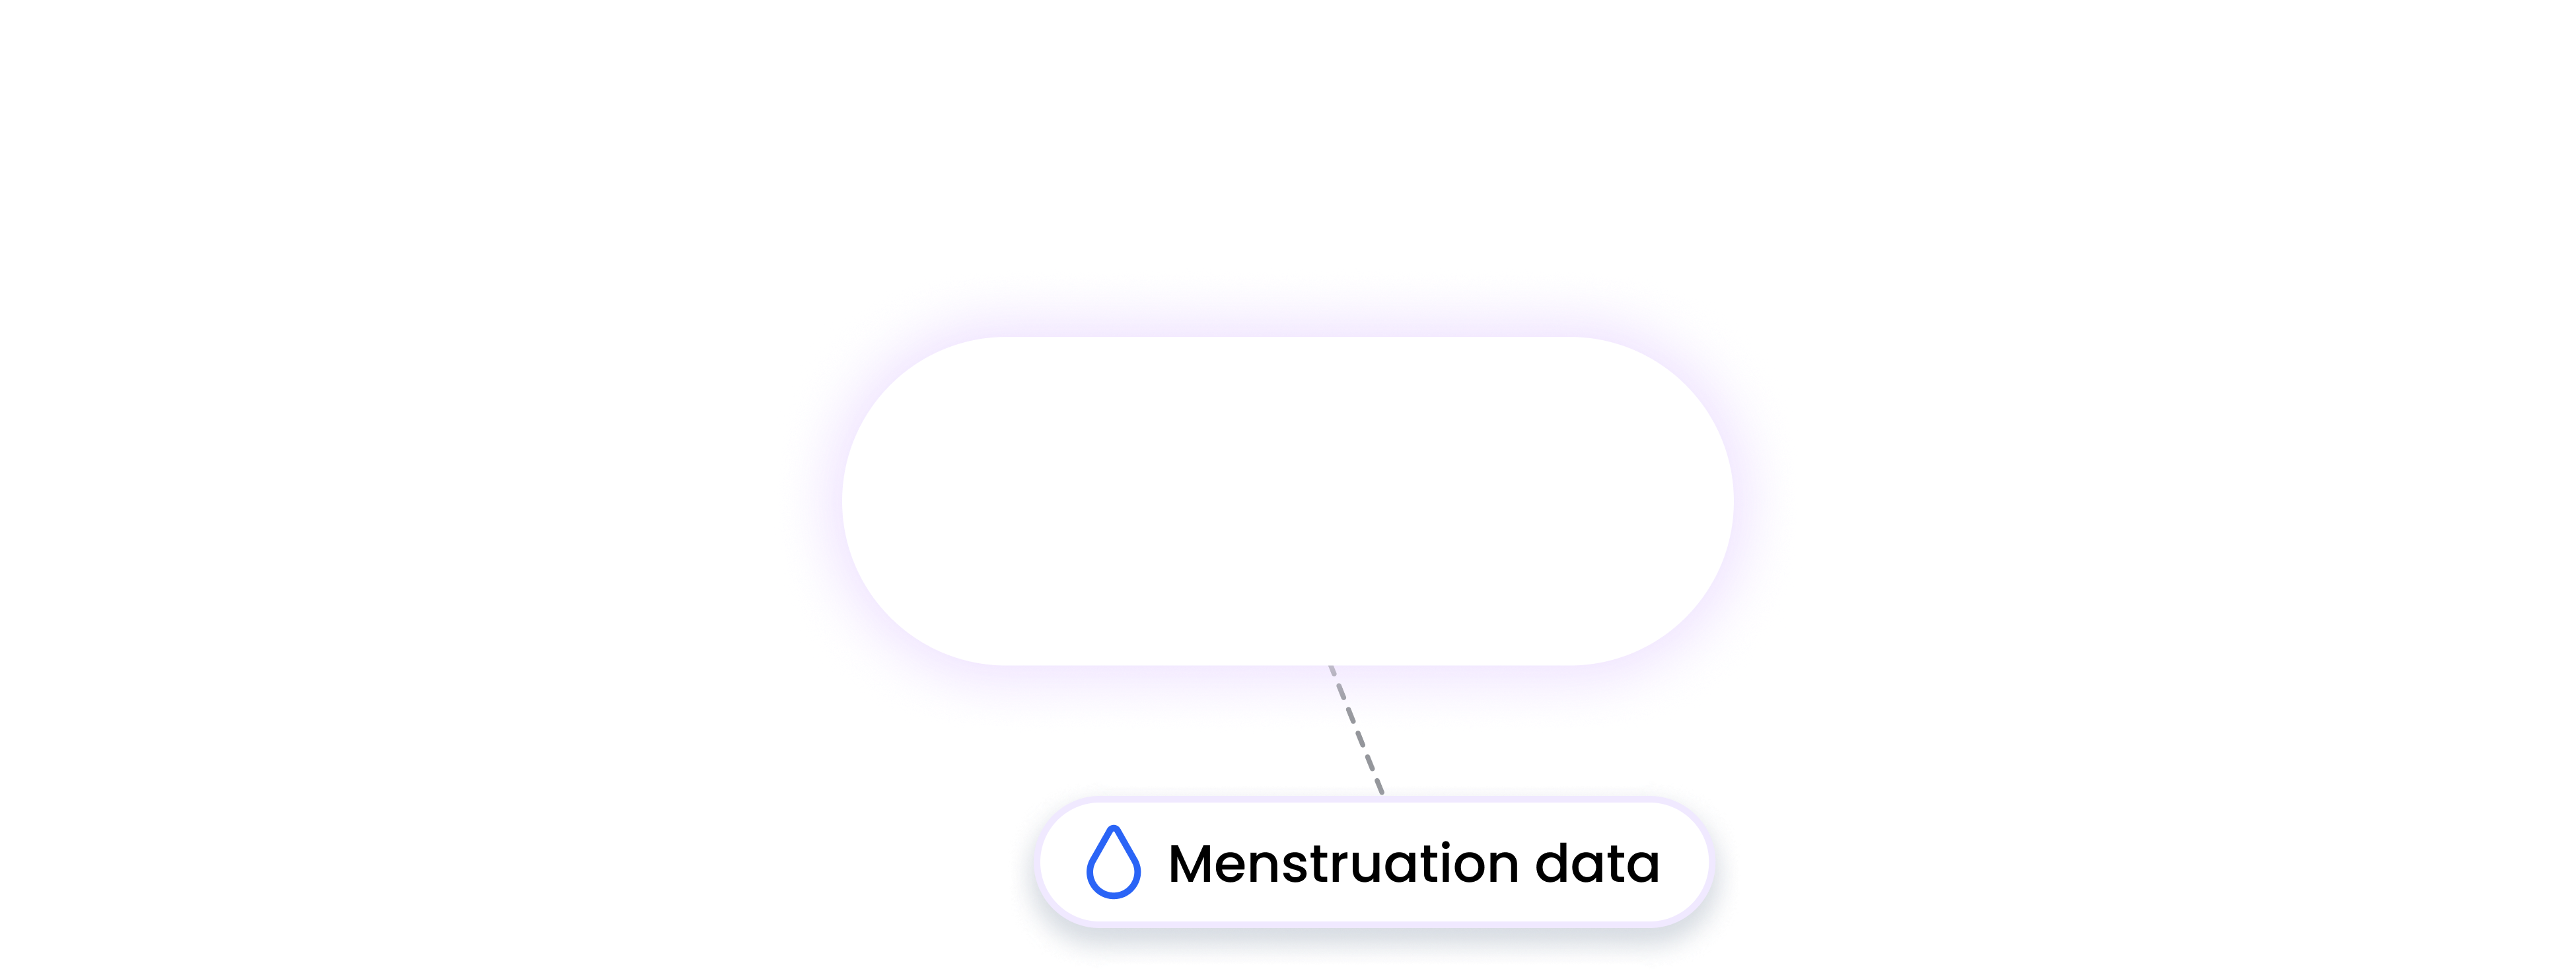 xert integration MENSTRUATION data